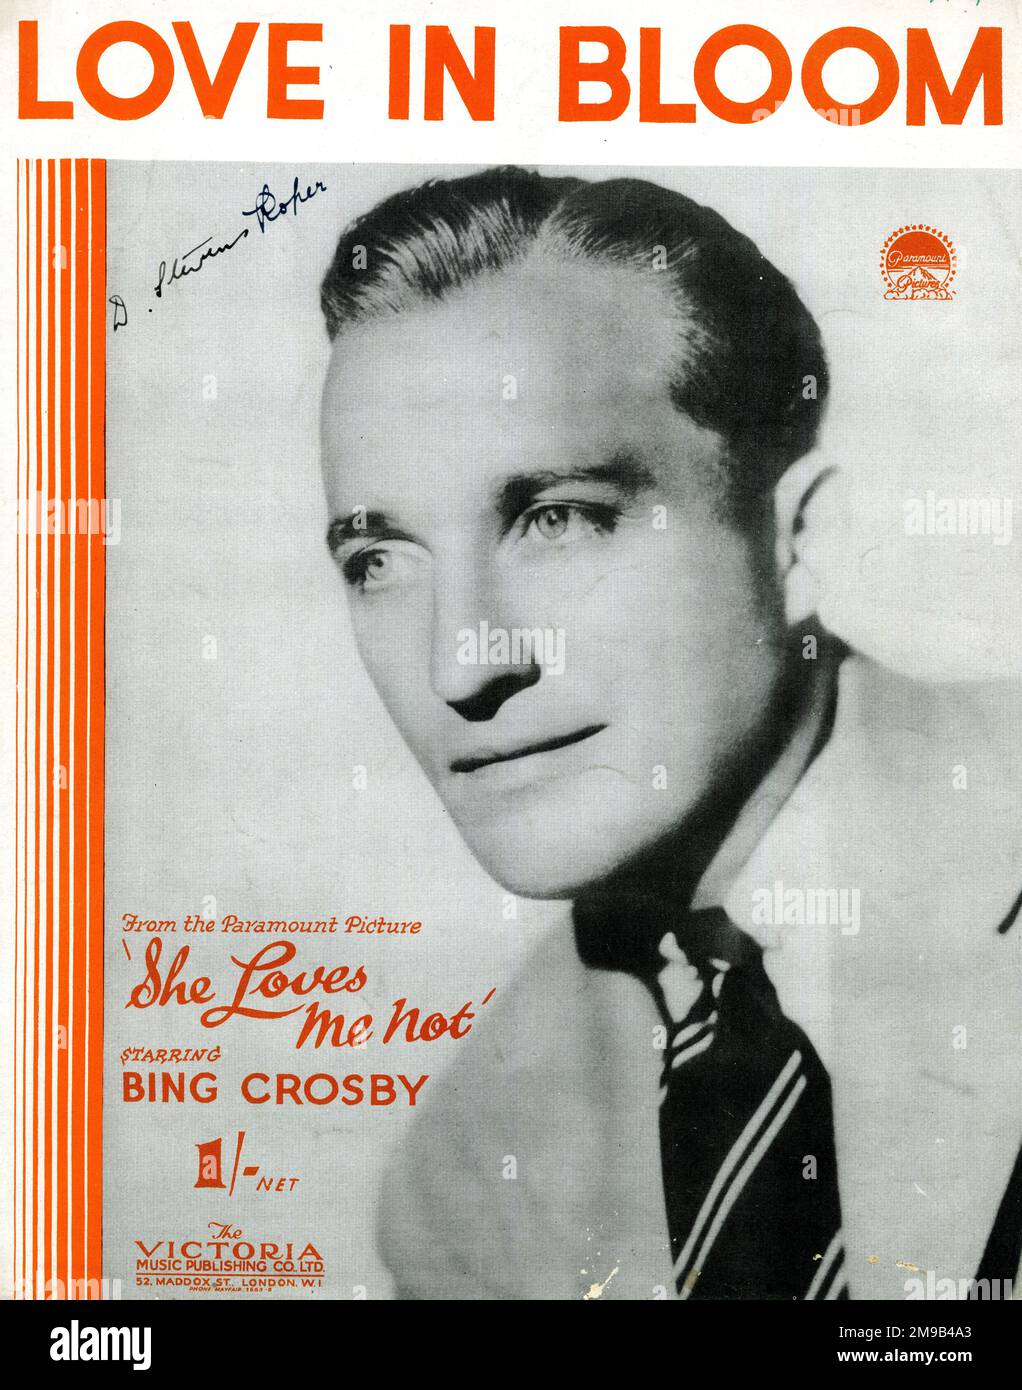 Copertina musicale, Love in Bloom, dalla Paramount Picture, She Loves Me Not, con Bing Crosby. Foto Stock